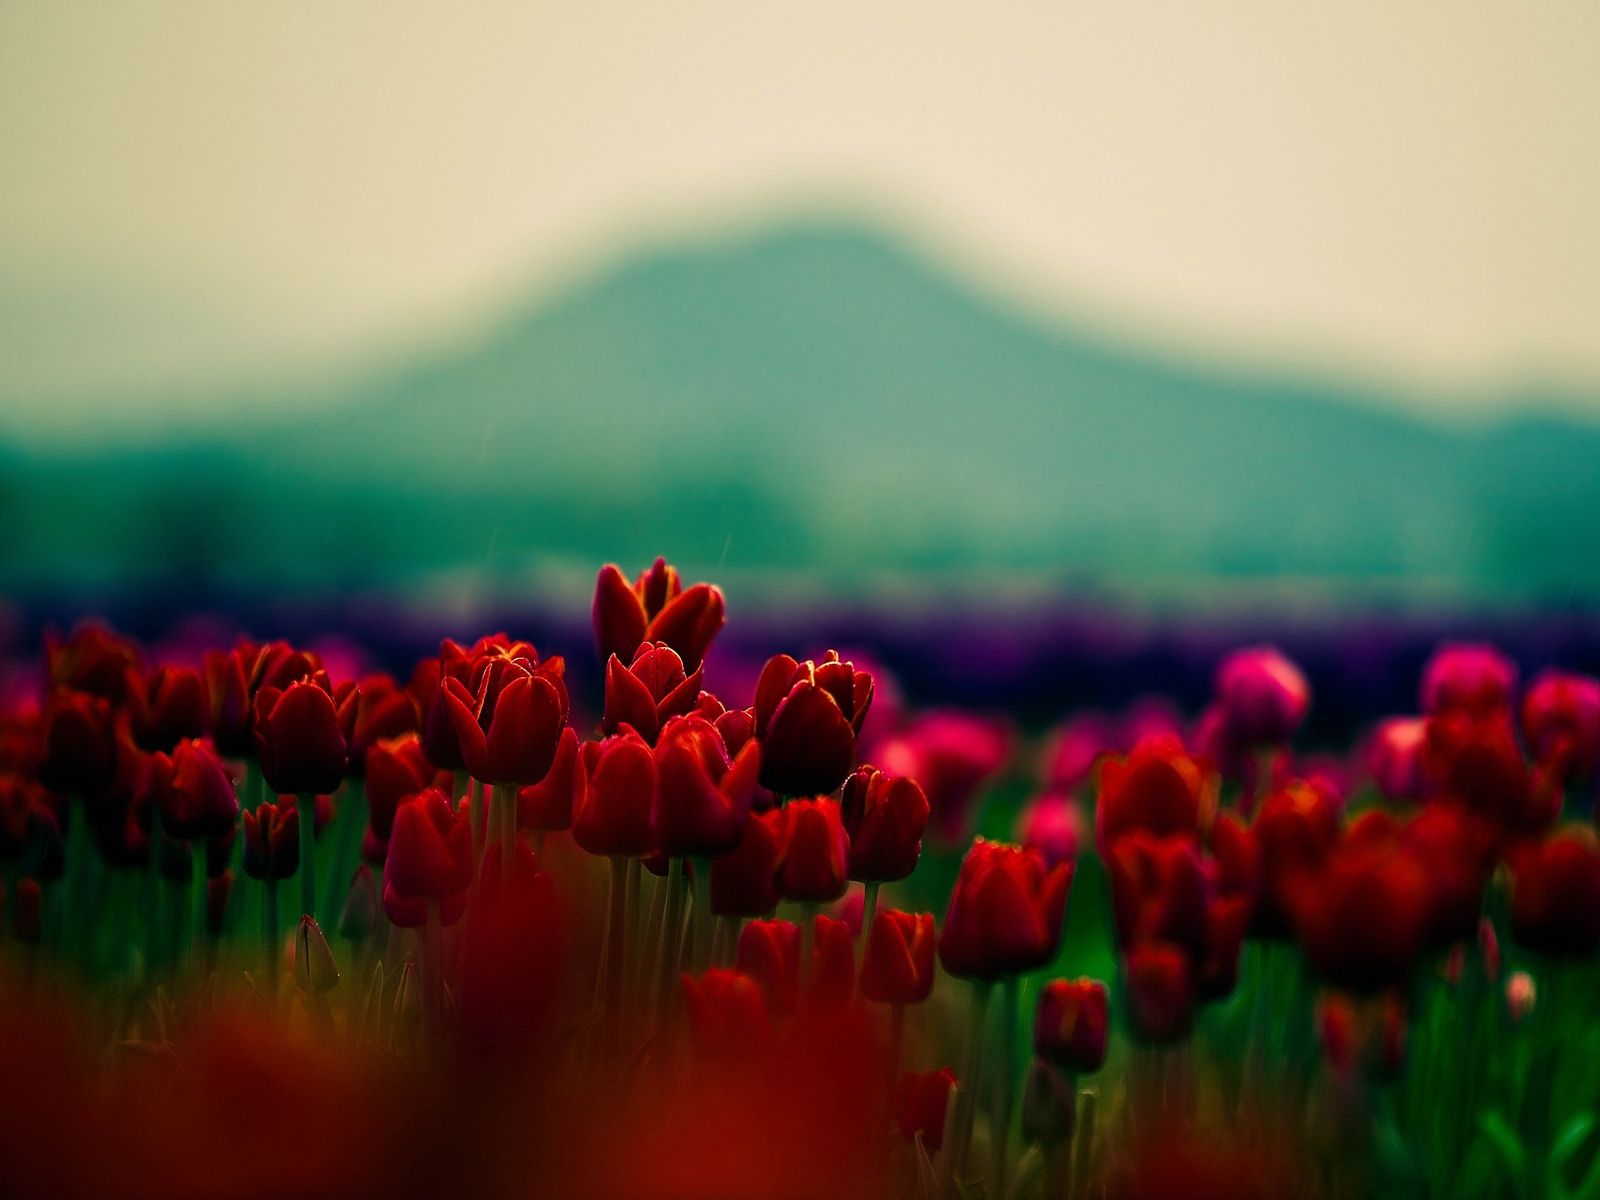 Download wallpaper 1600x1200 tulips, flowers, field, blur